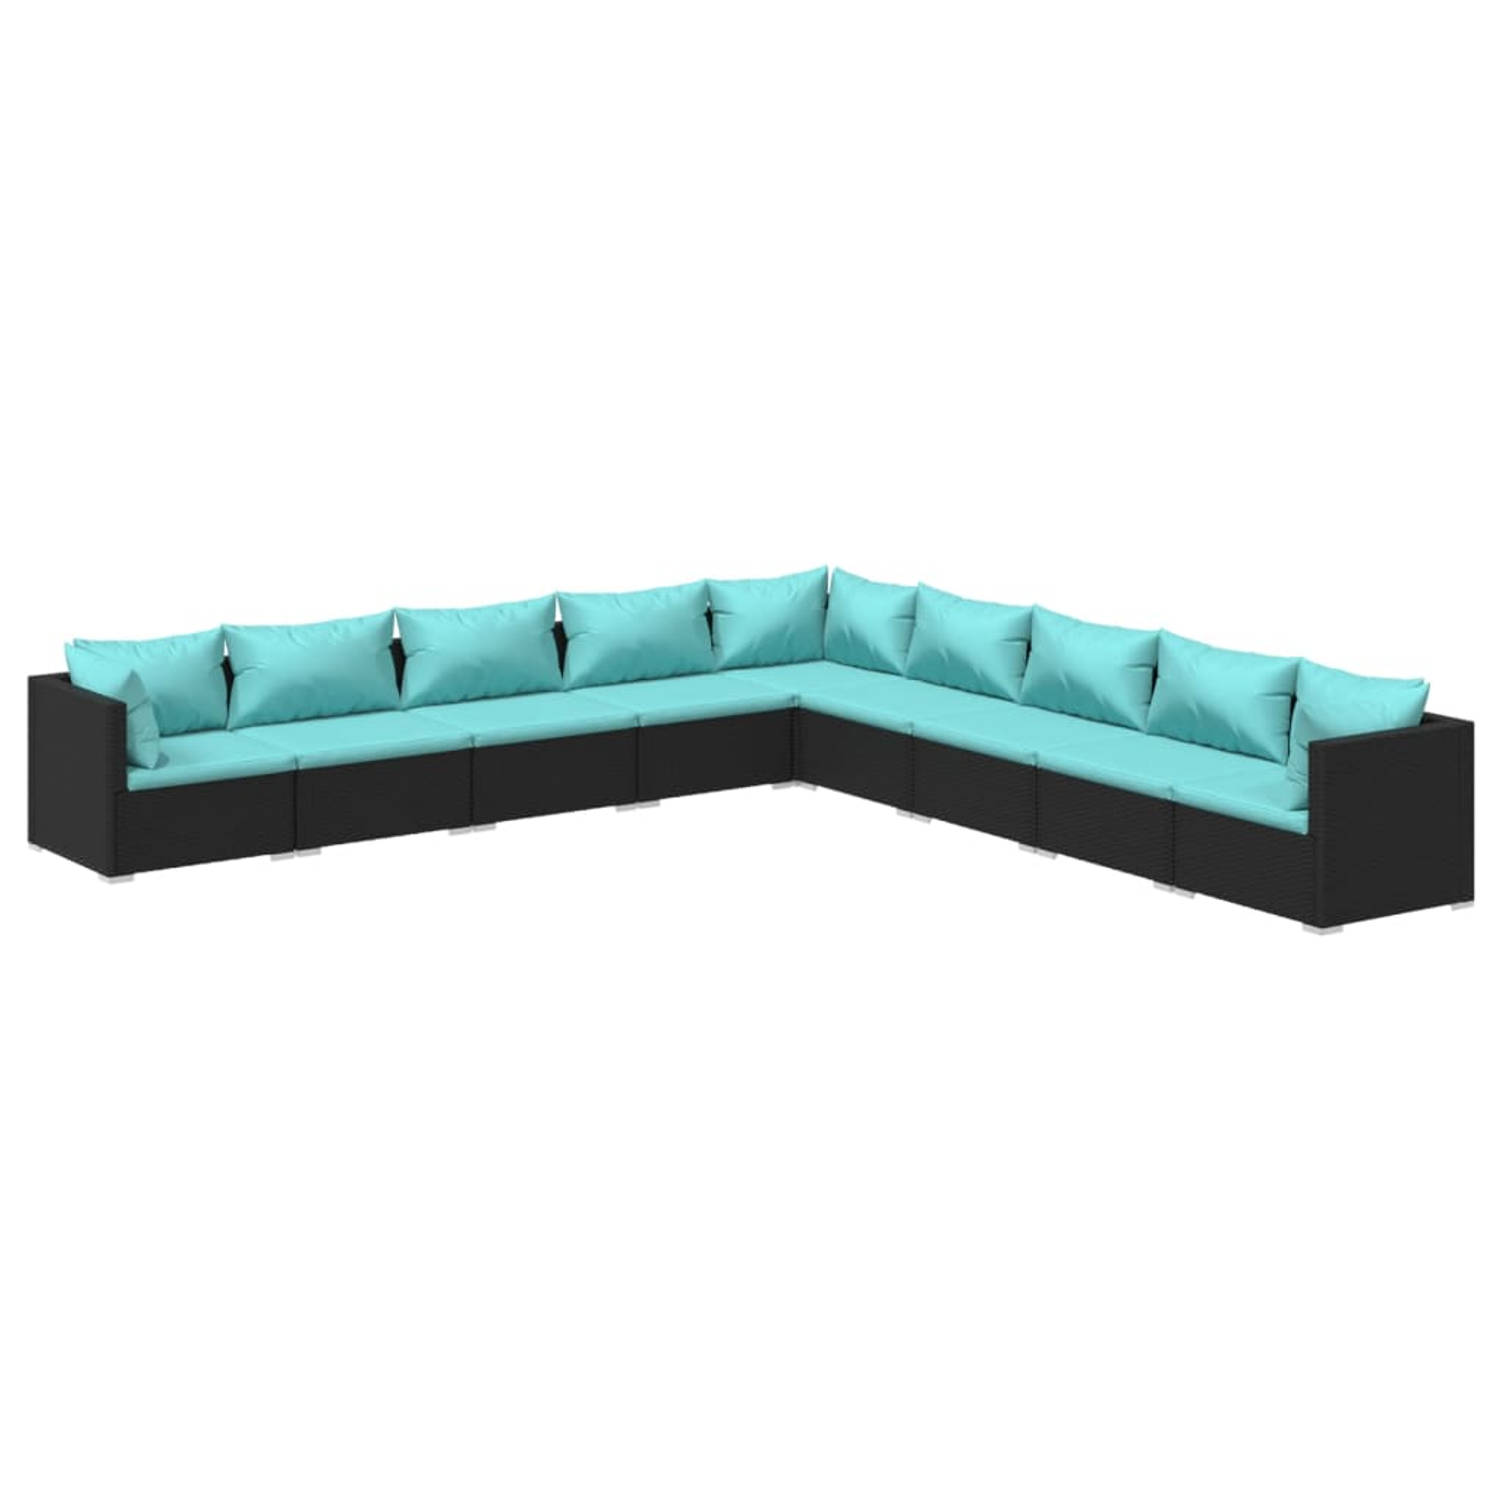 The Living Store Loungeset - Zwarte PE-rattan - Stalen frame - Waterblauwe kussens - Modulair design - Comfortabel - 150cm breed